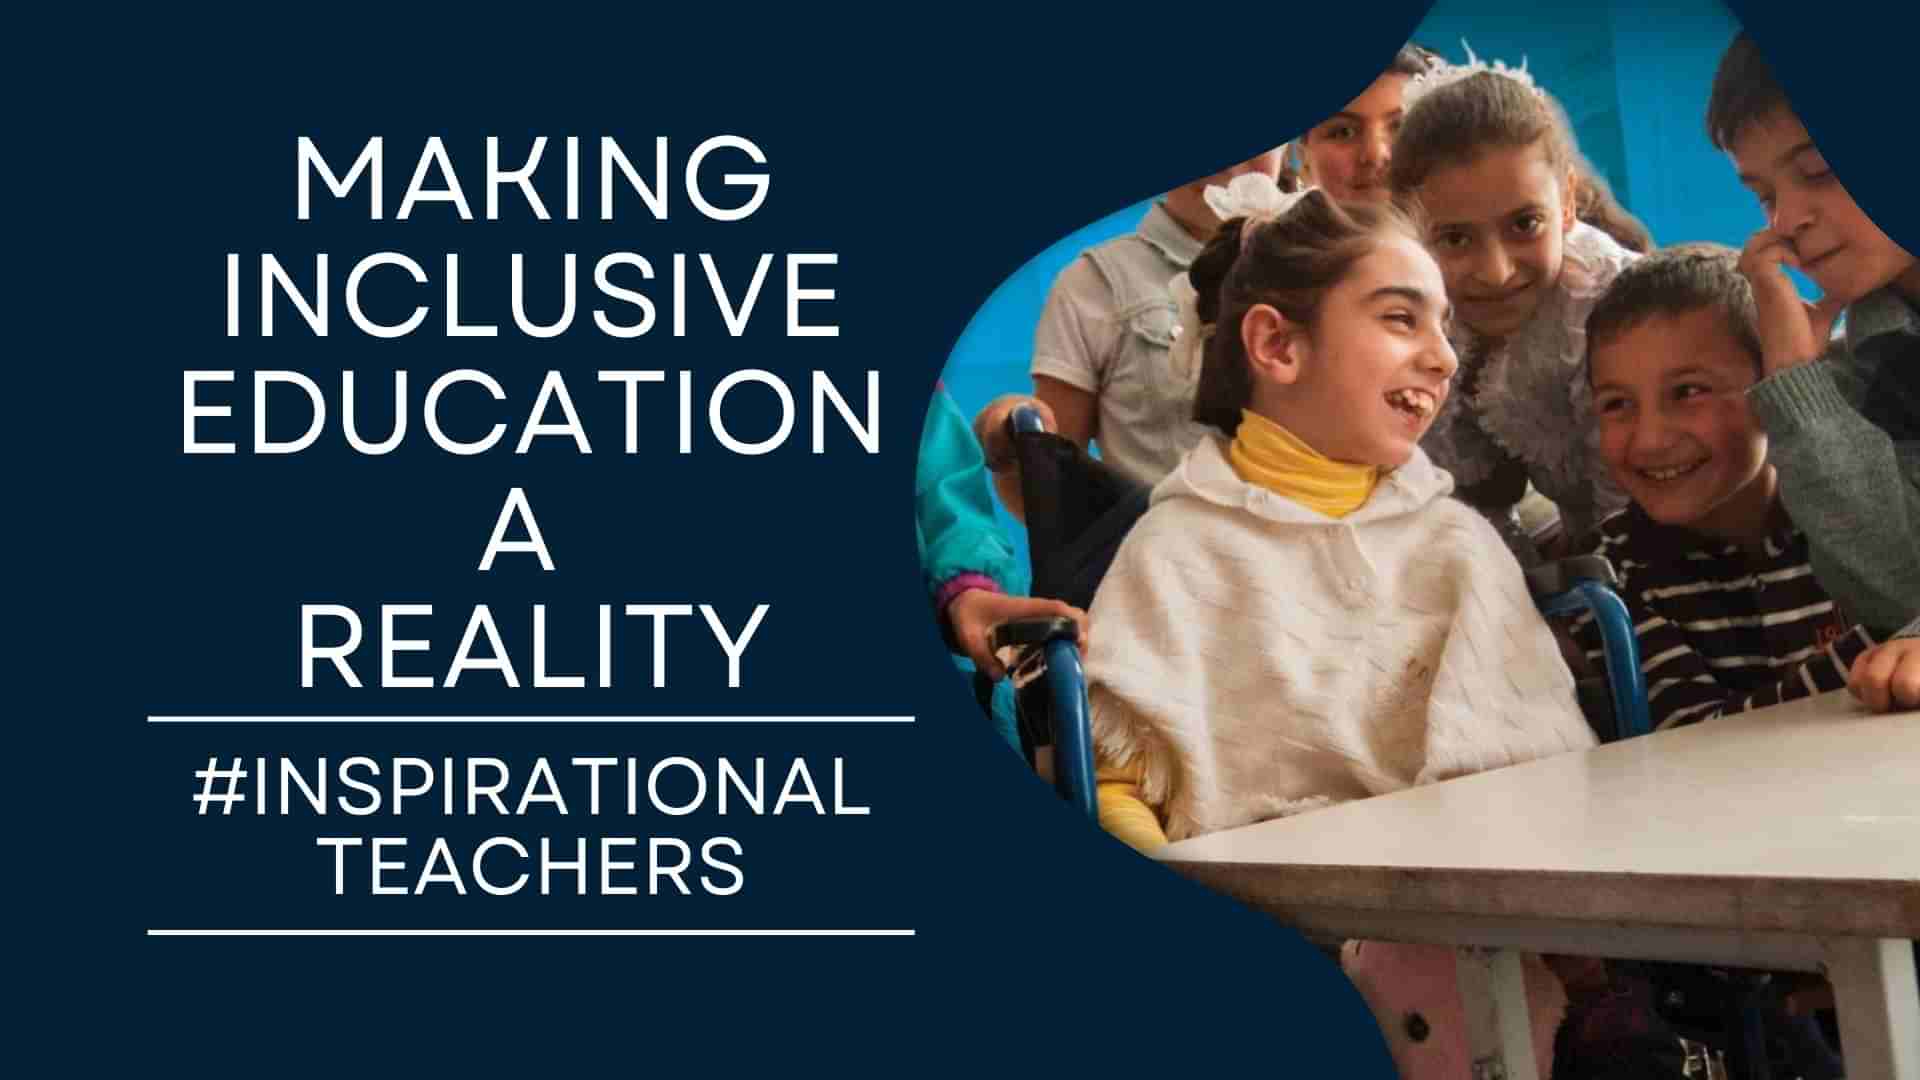 Teachers Day 2022: Meet #InspirationalTeachers who made Inclusive Education a Reality